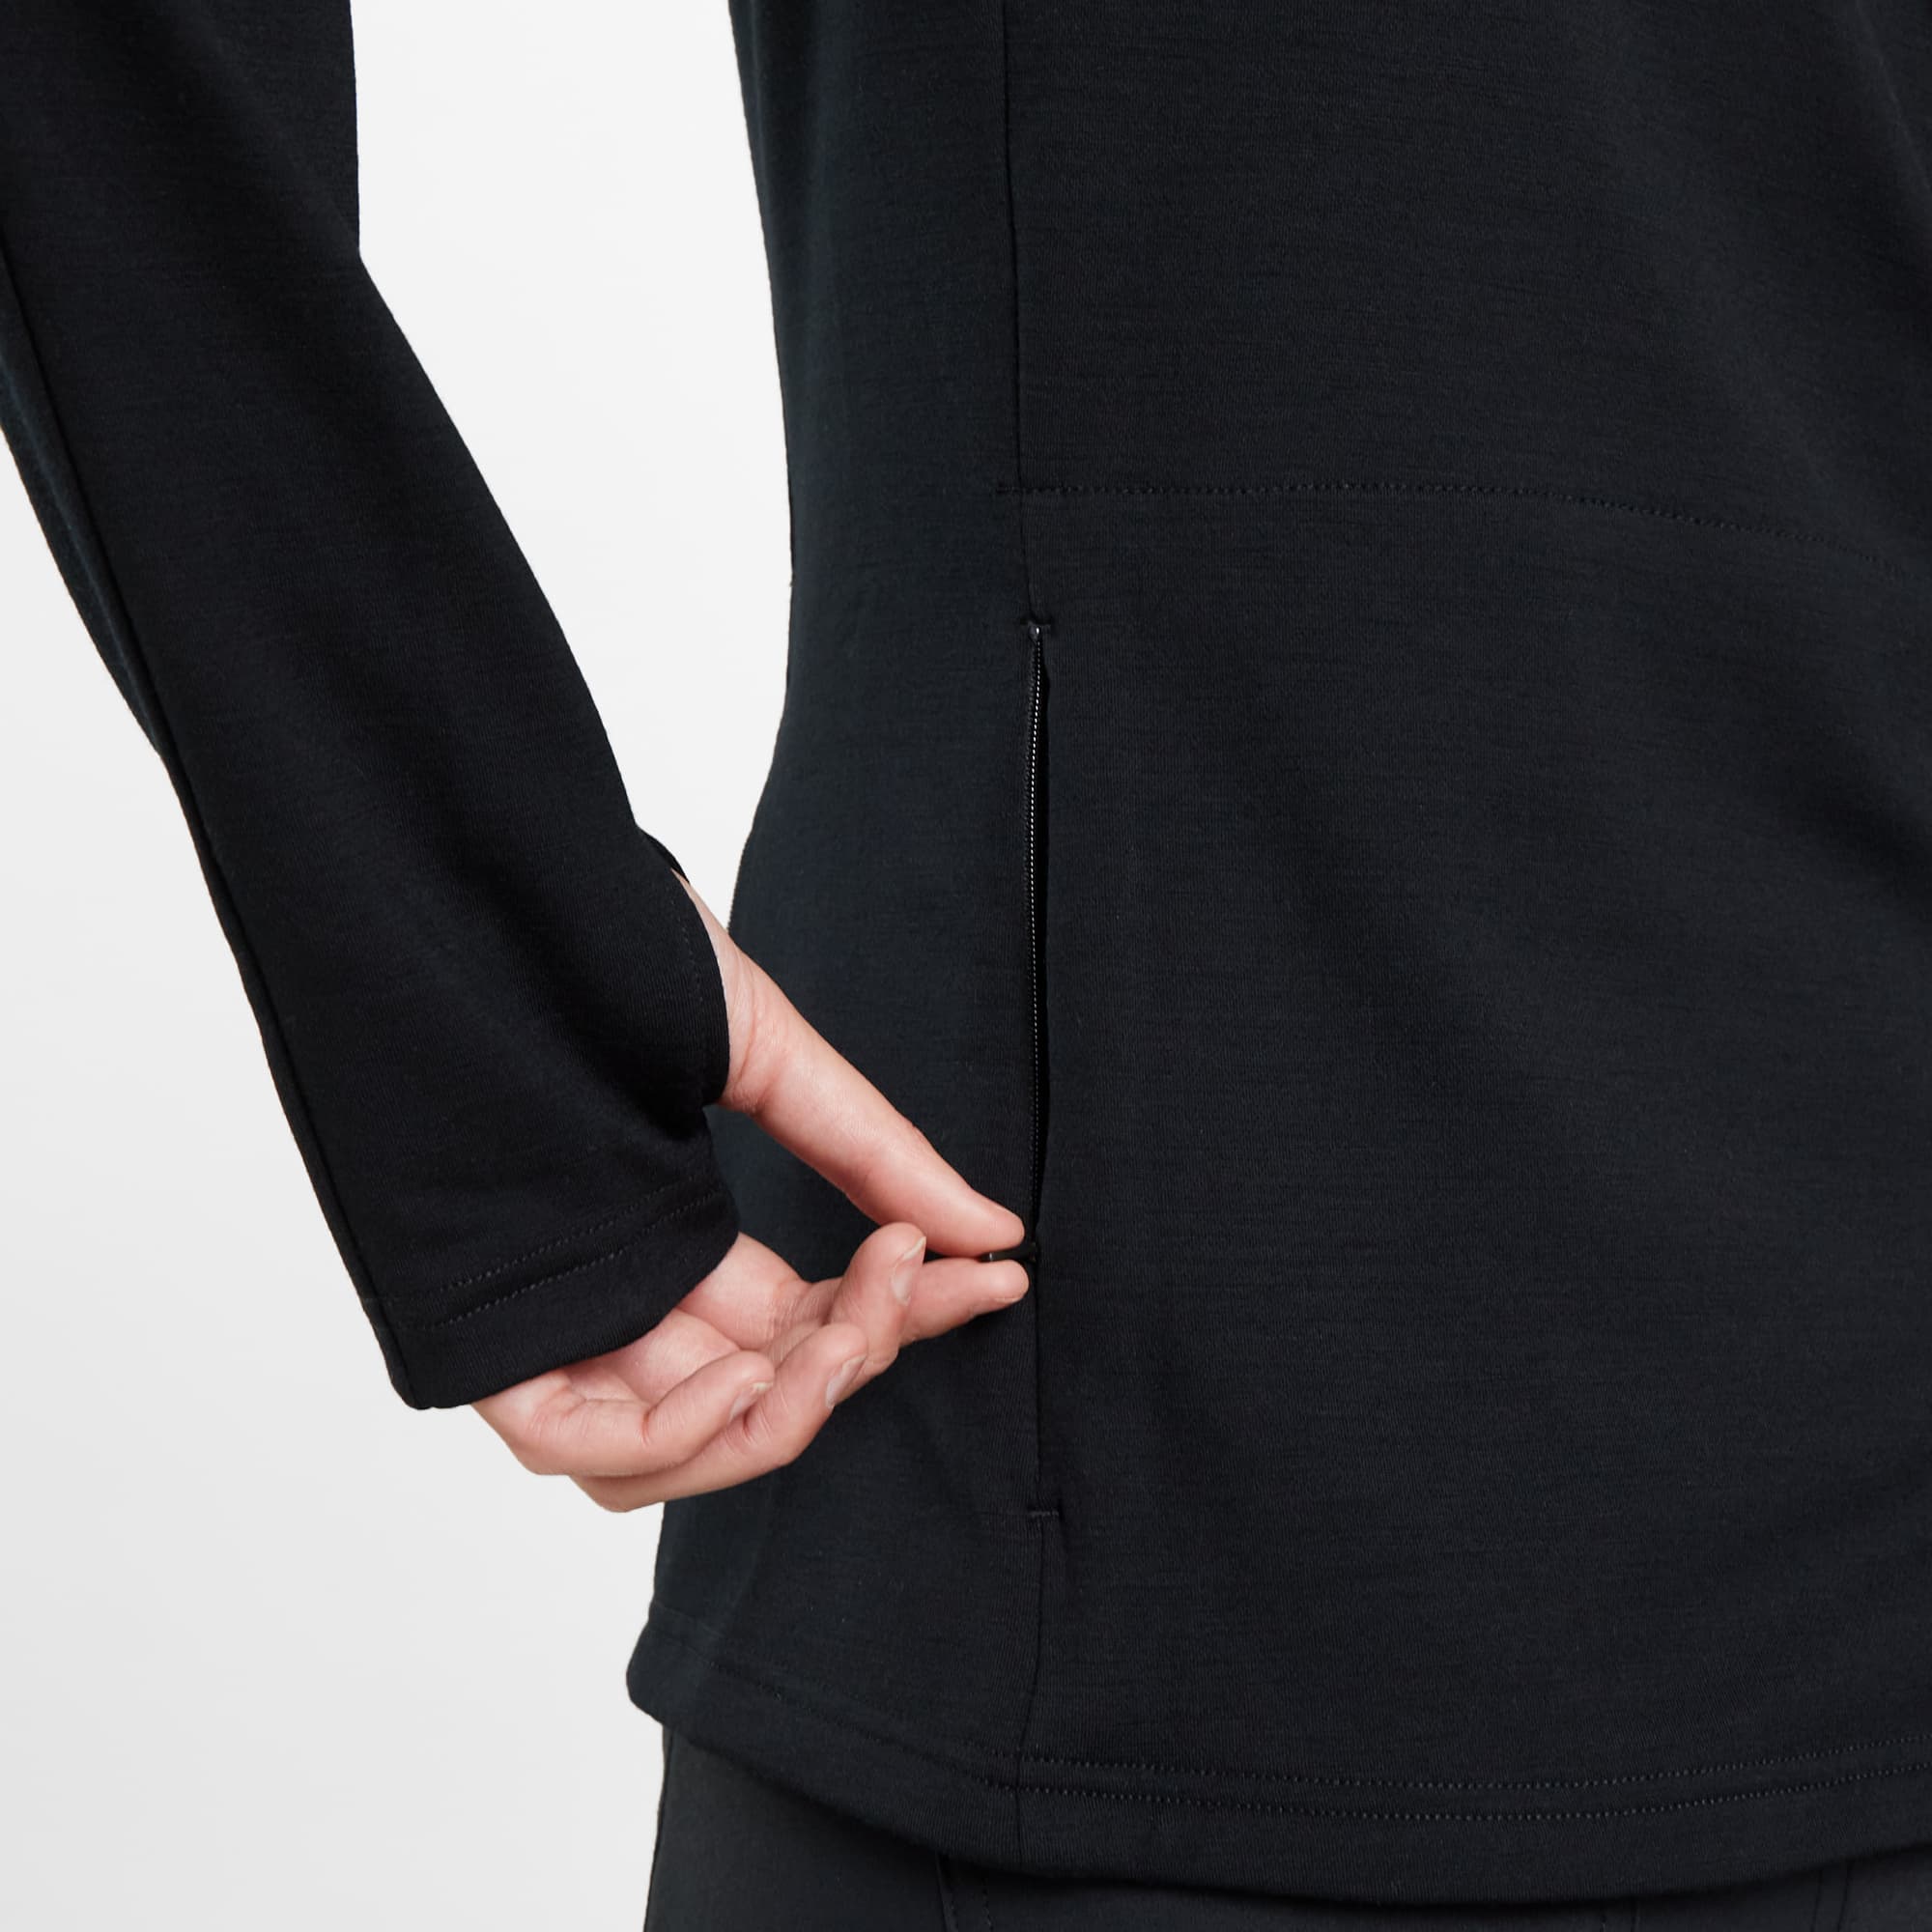 Women's Merino blend performance hoodie in black worn by a woman back zipper view